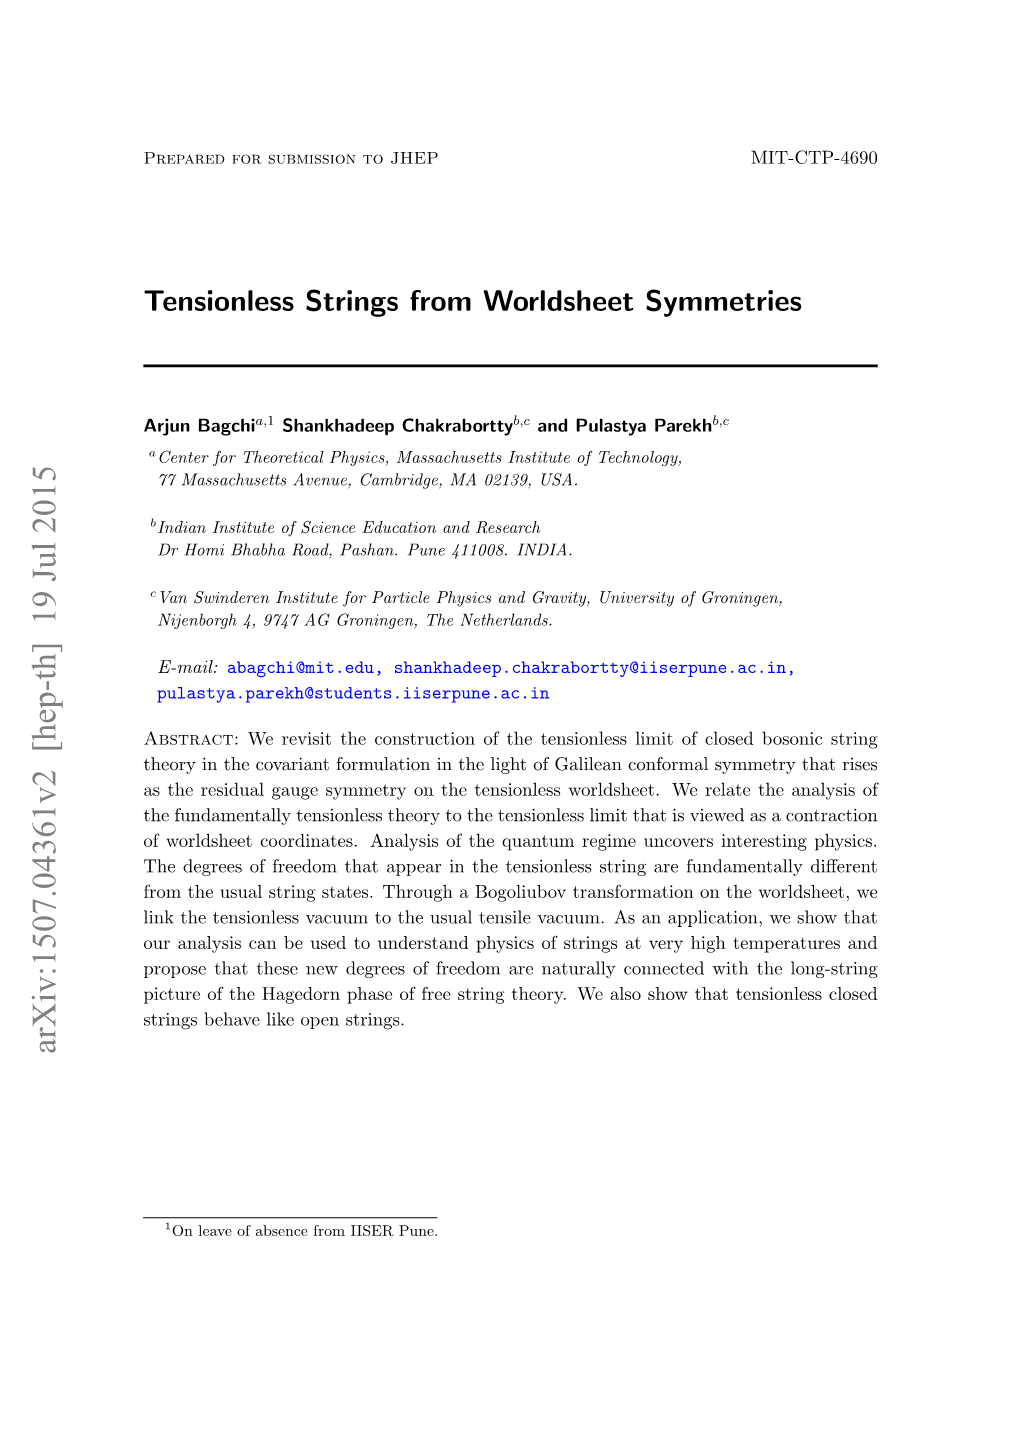 Tensionless Strings from Worldsheet Symmetries